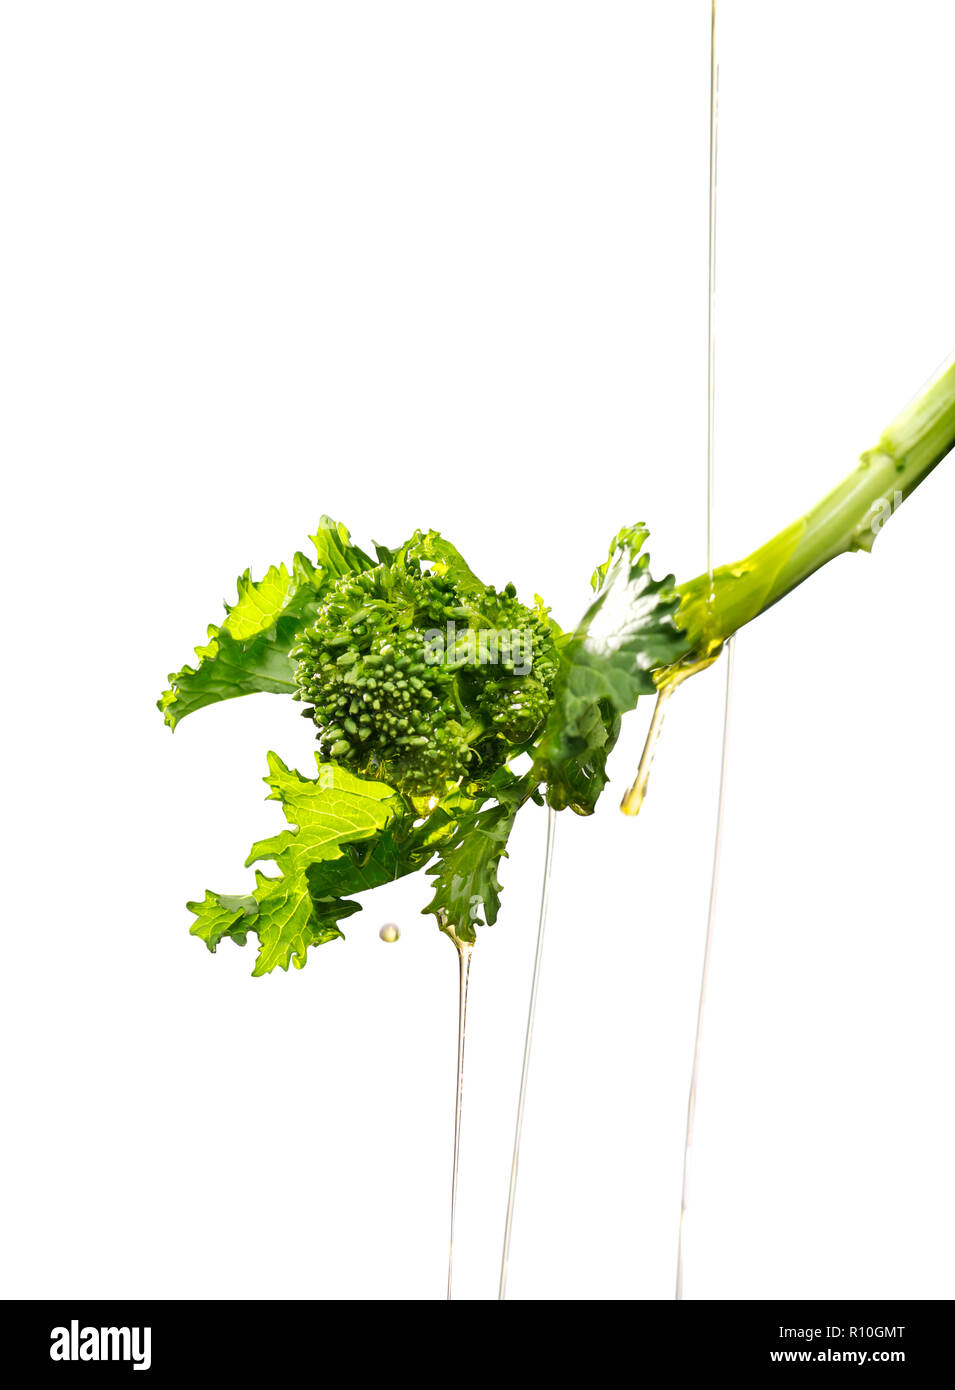 Oil pouring onto tender stem broccoli, white background Stock Photo